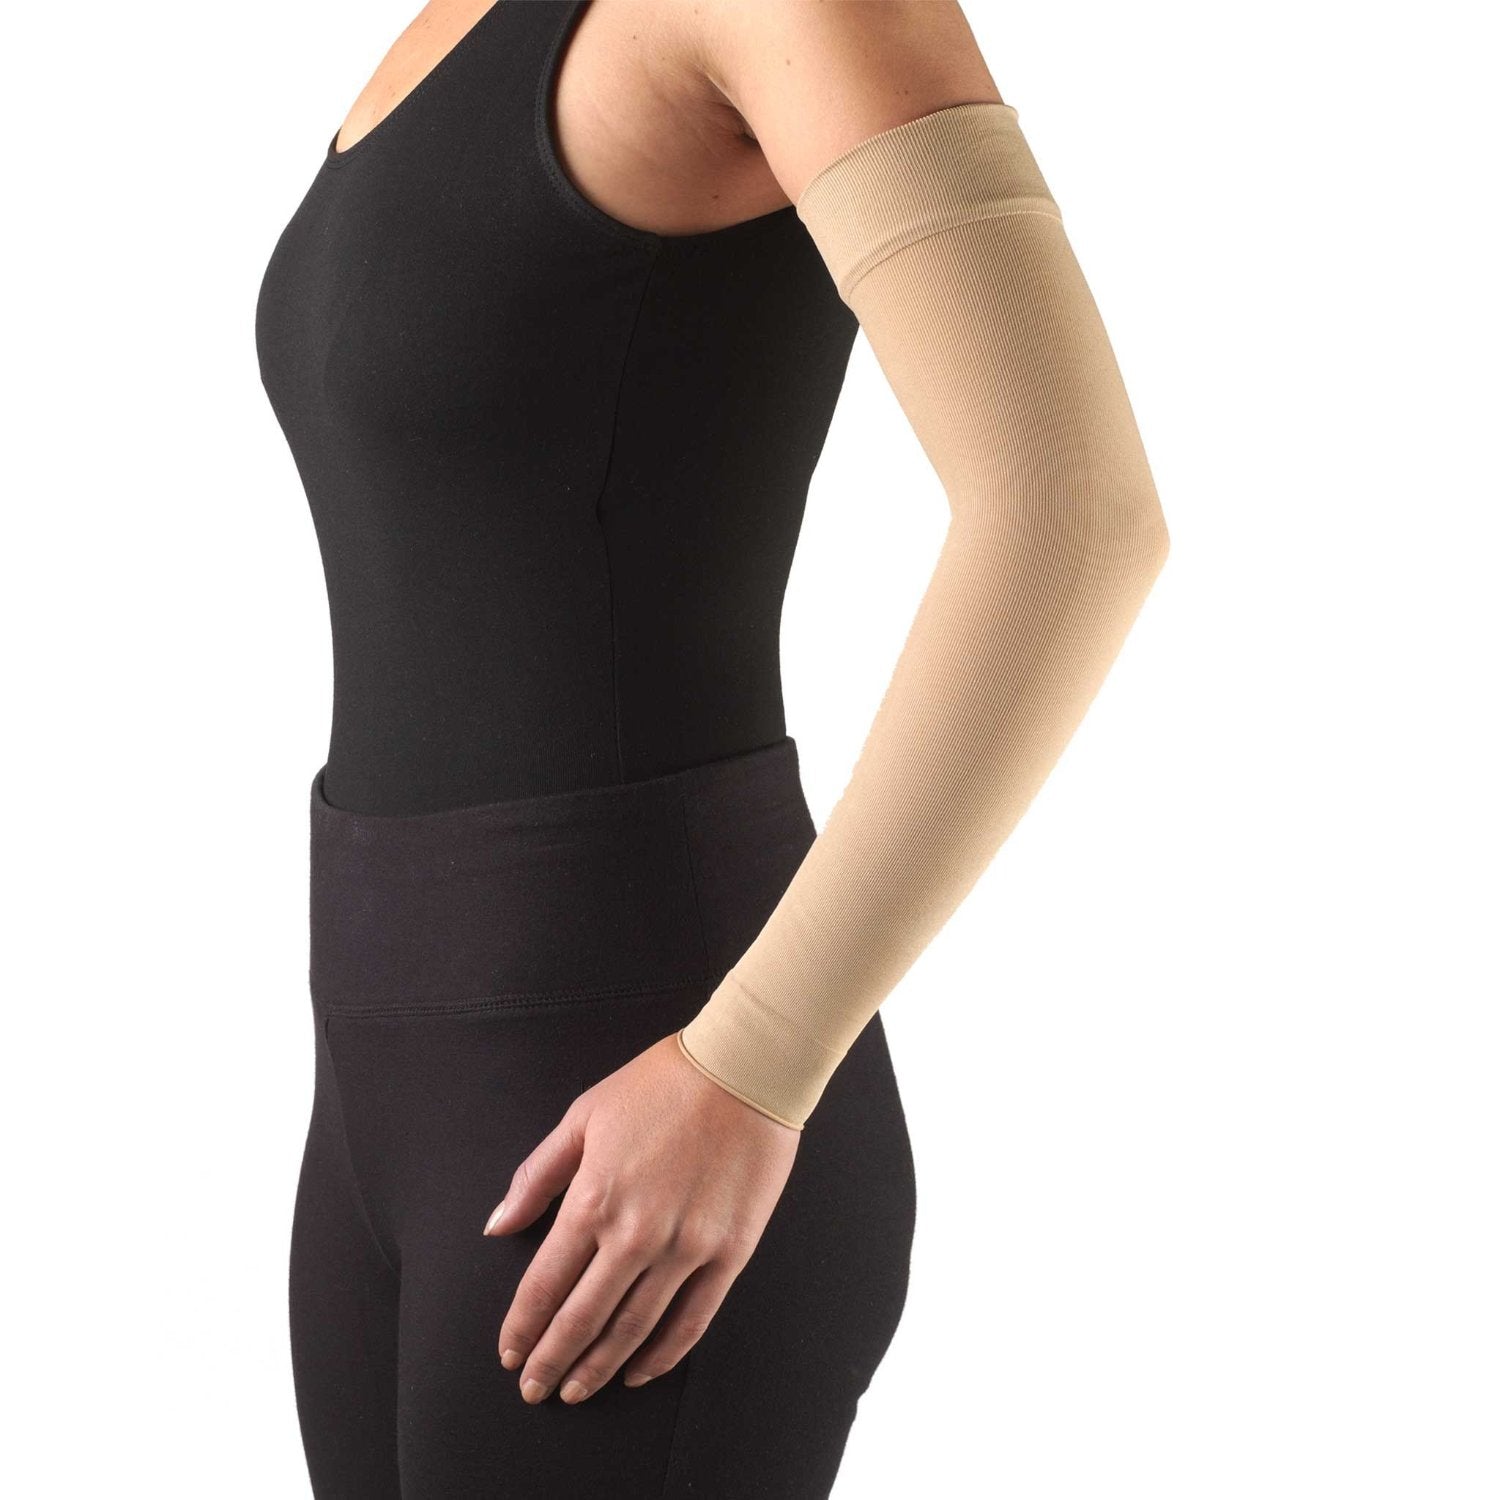 Arm Plus Compression Garments for Lymphedema & Venous Disorders